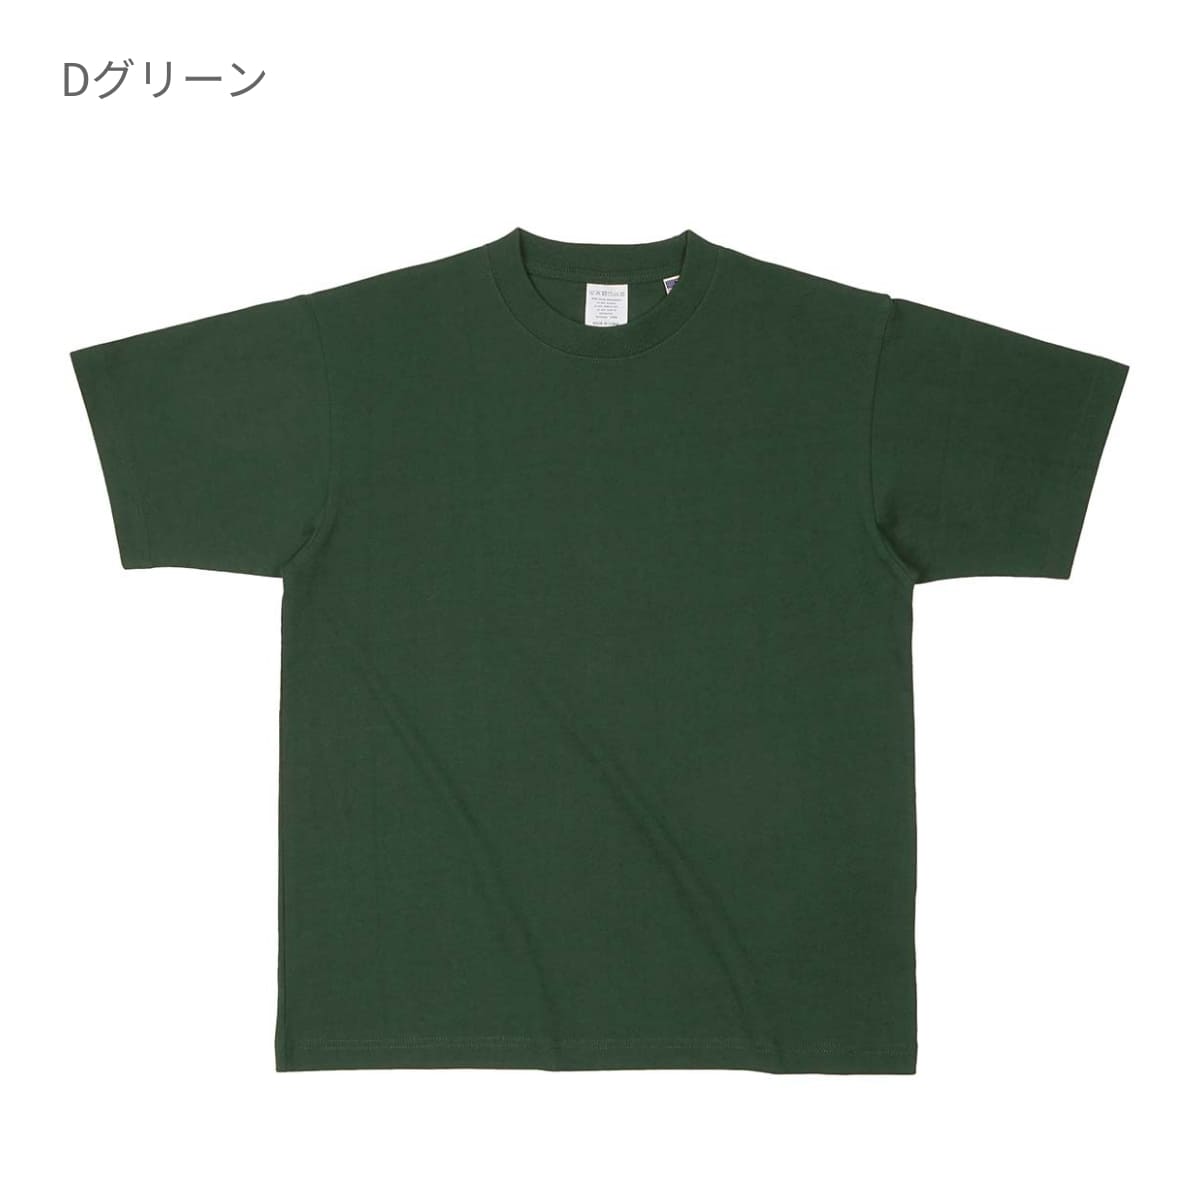 USAコットンTシャツ | ビッグサイズ | 1枚 | UCS-950 | ダルサンド